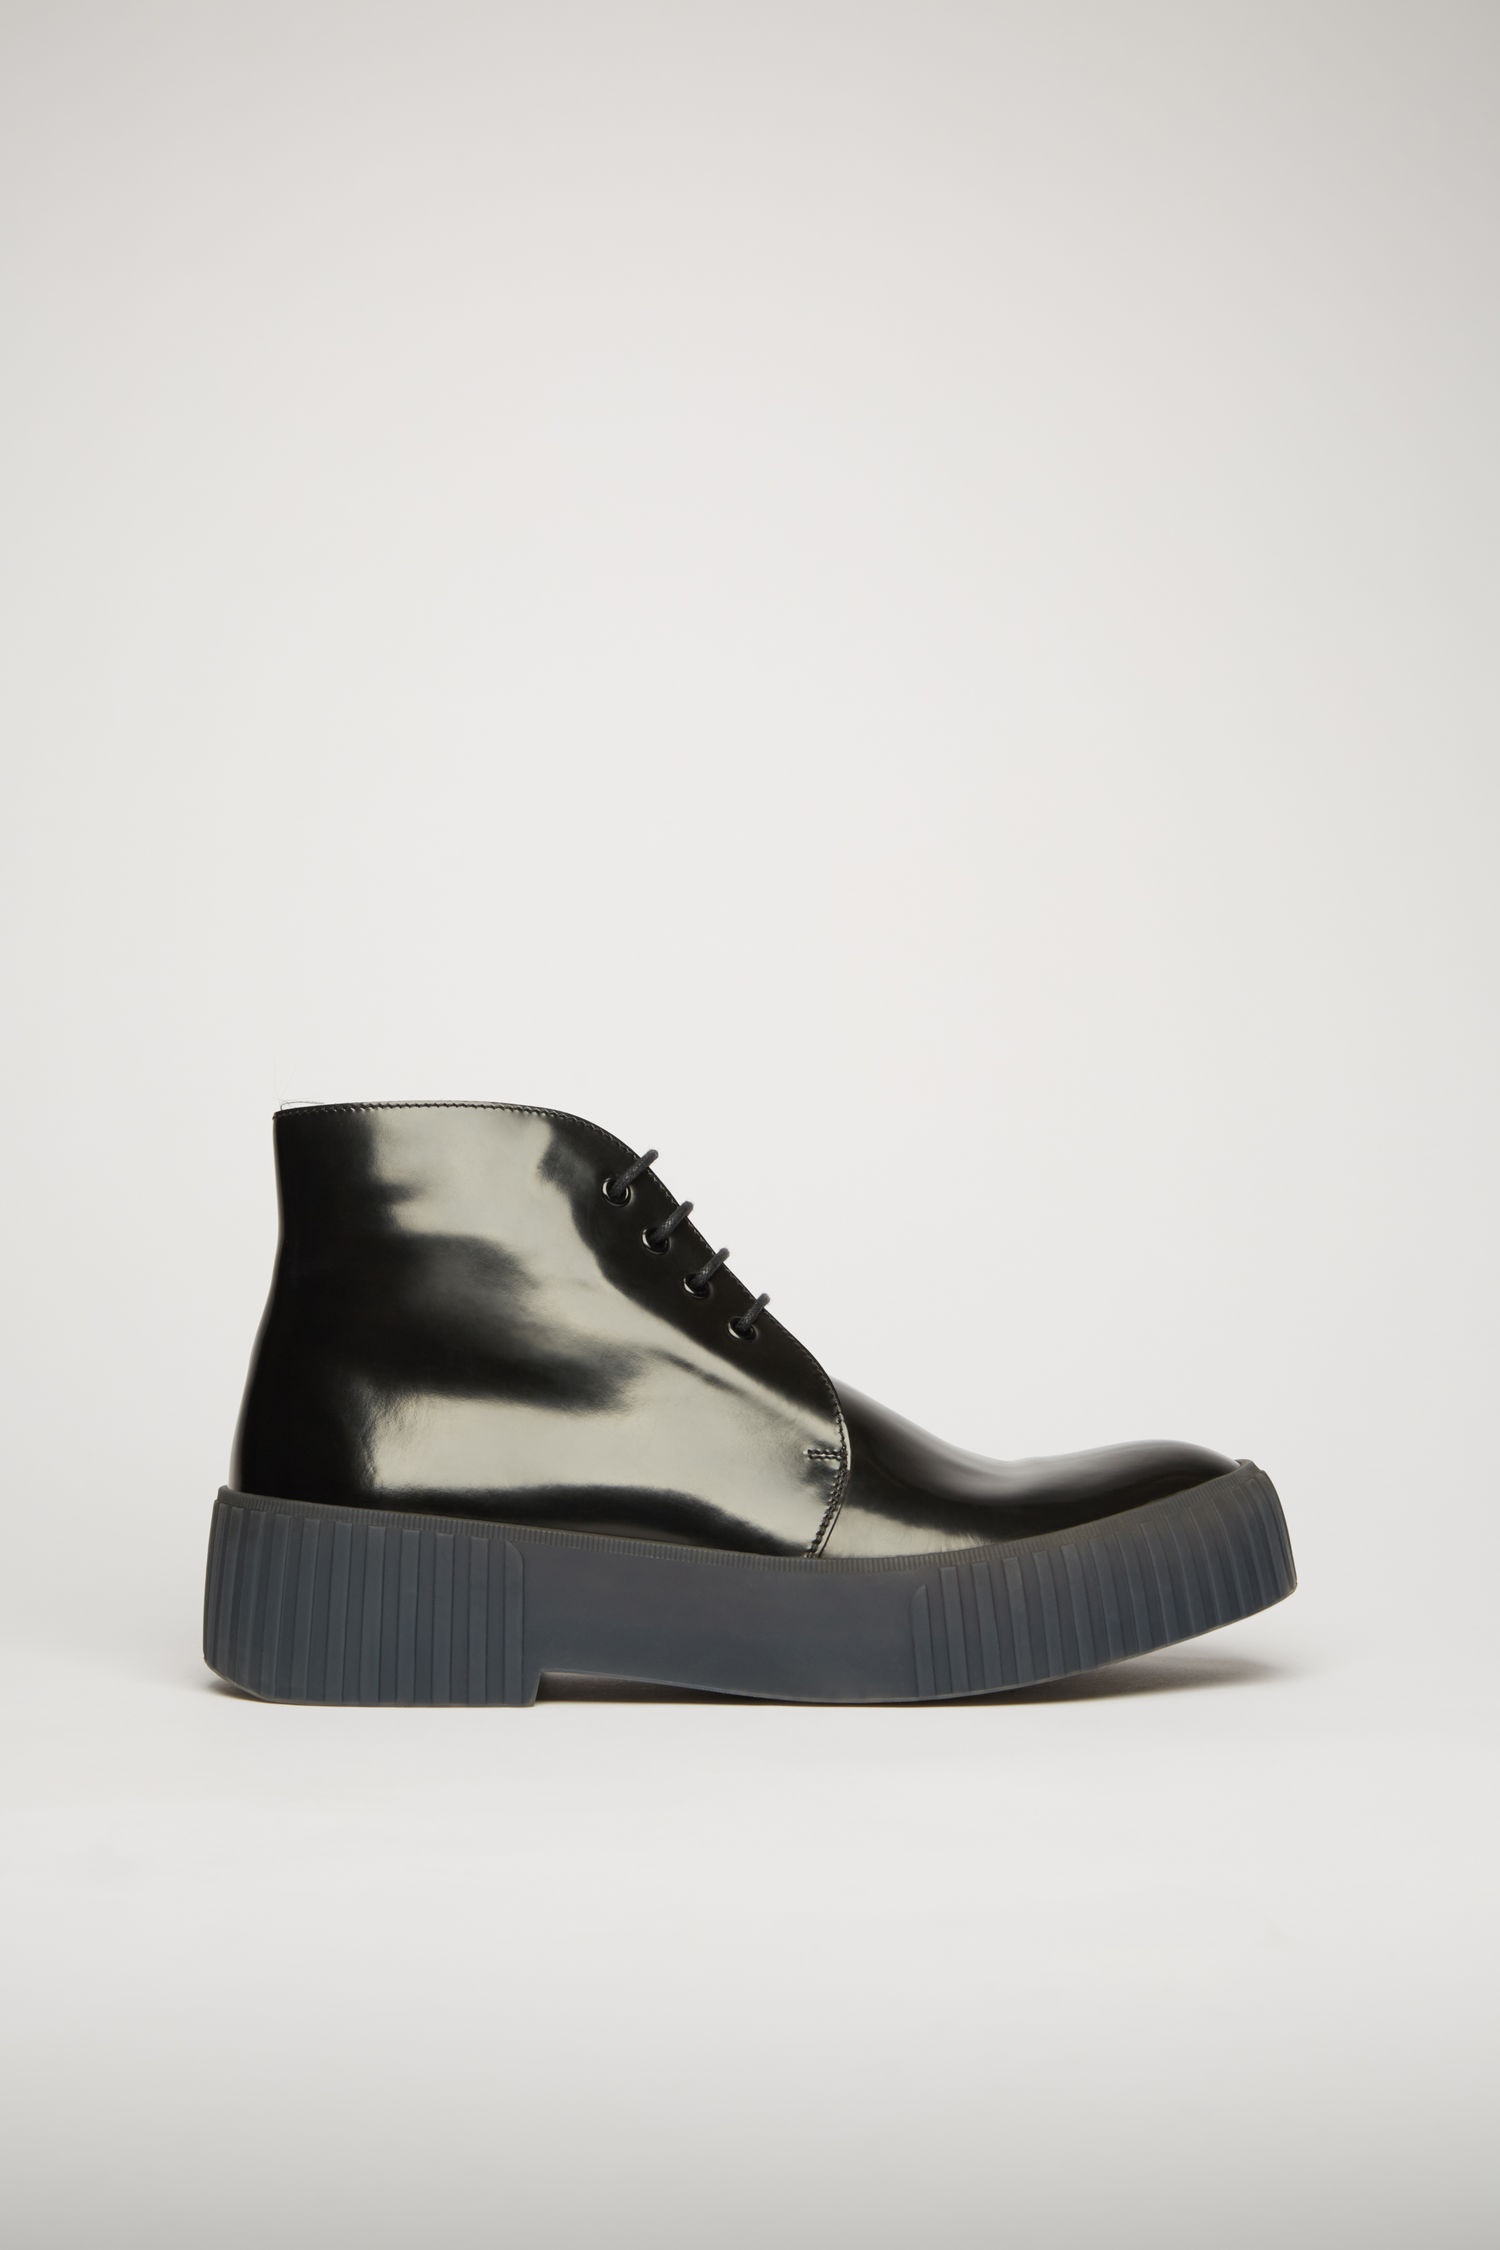 Leather chukka shoes black/grey - 1